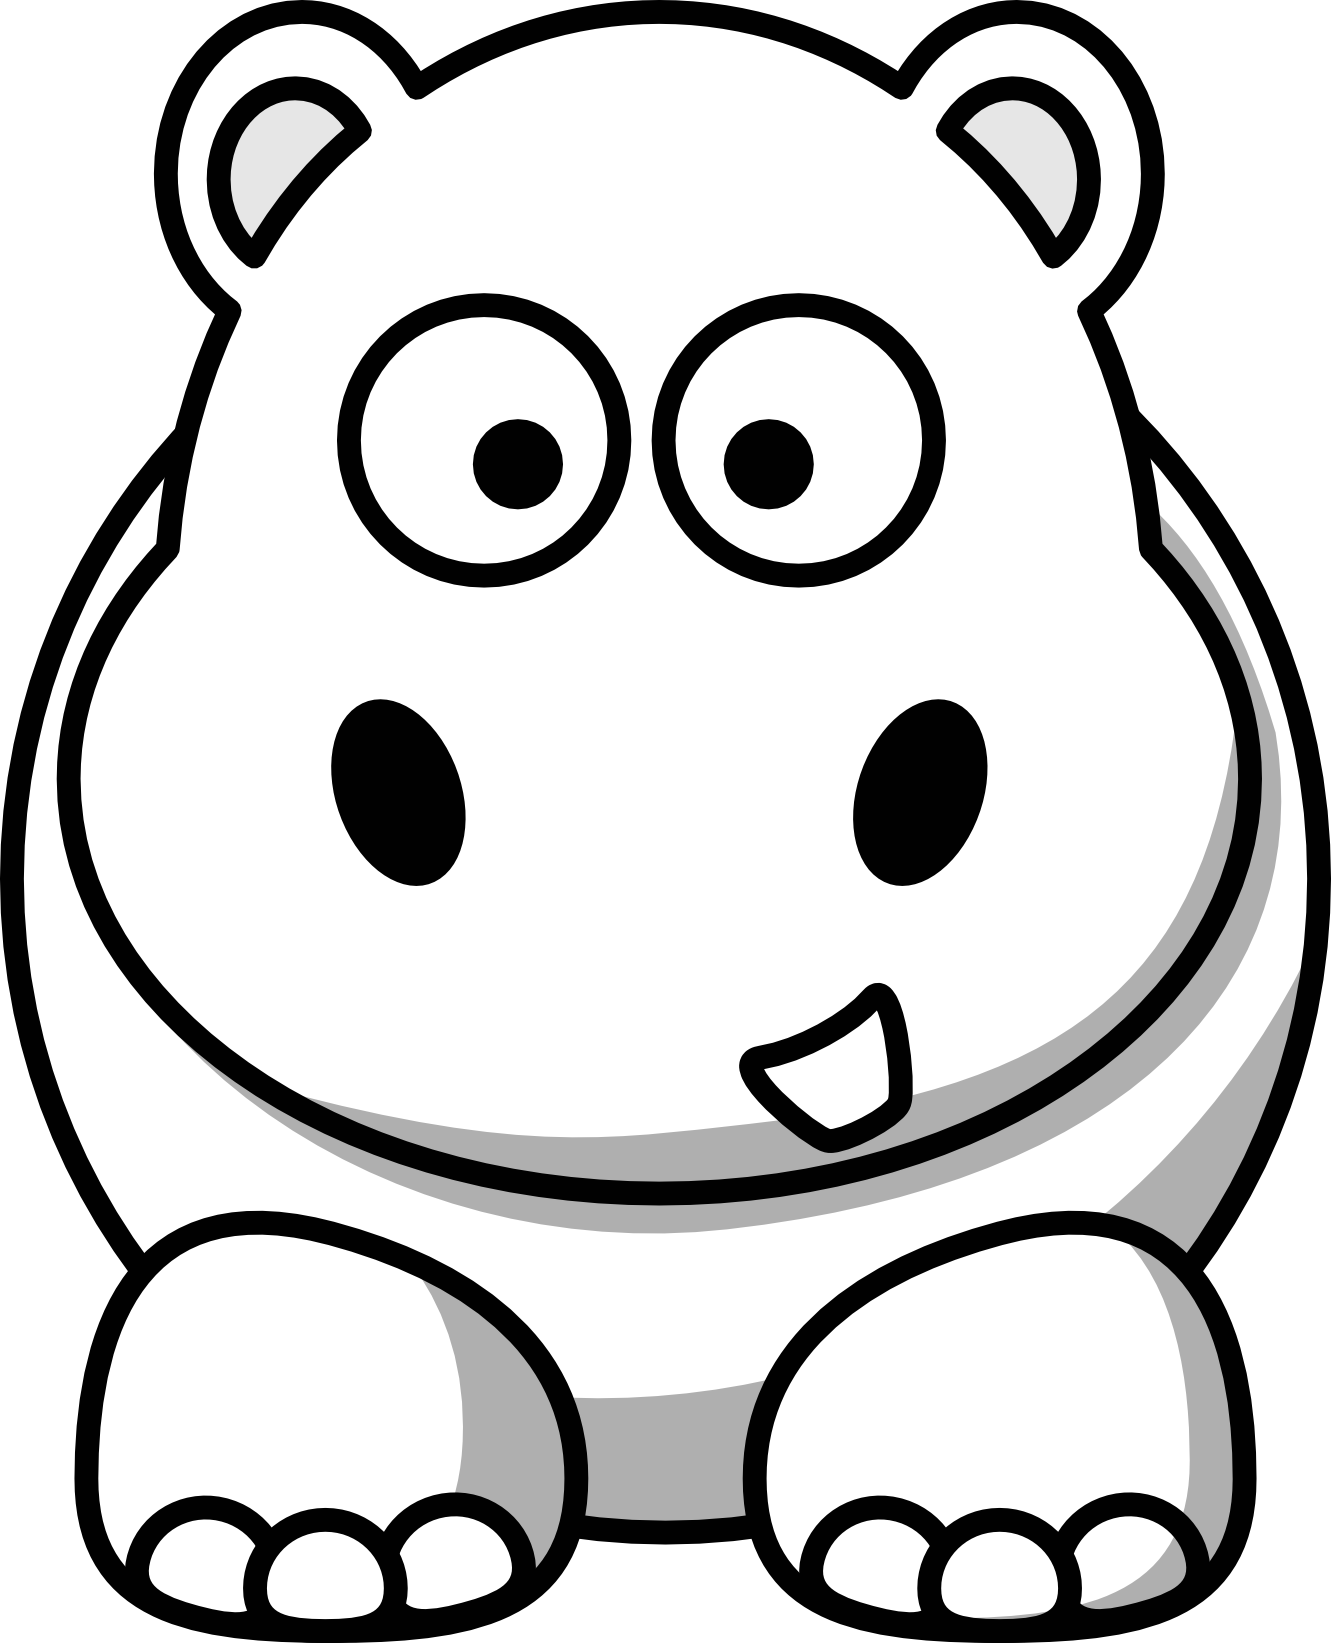 Hippopotamus clip art | Clipart Panda - Free Clipart Images